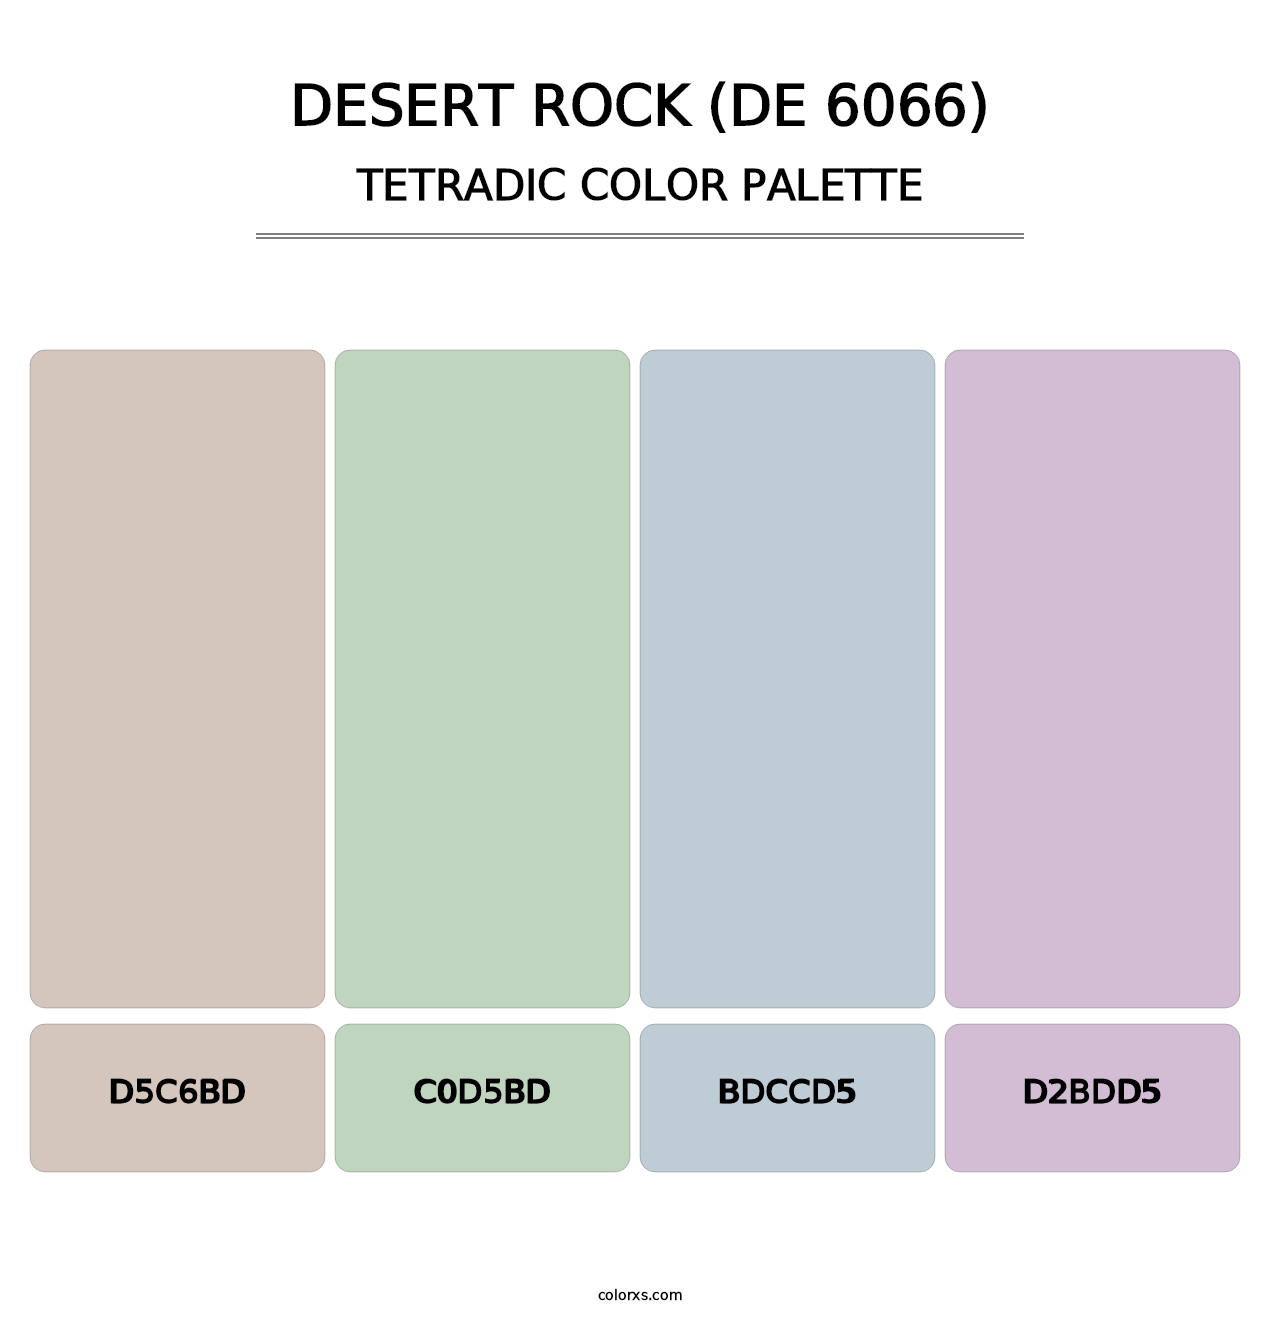 Desert Rock (DE 6066) - Tetradic Color Palette